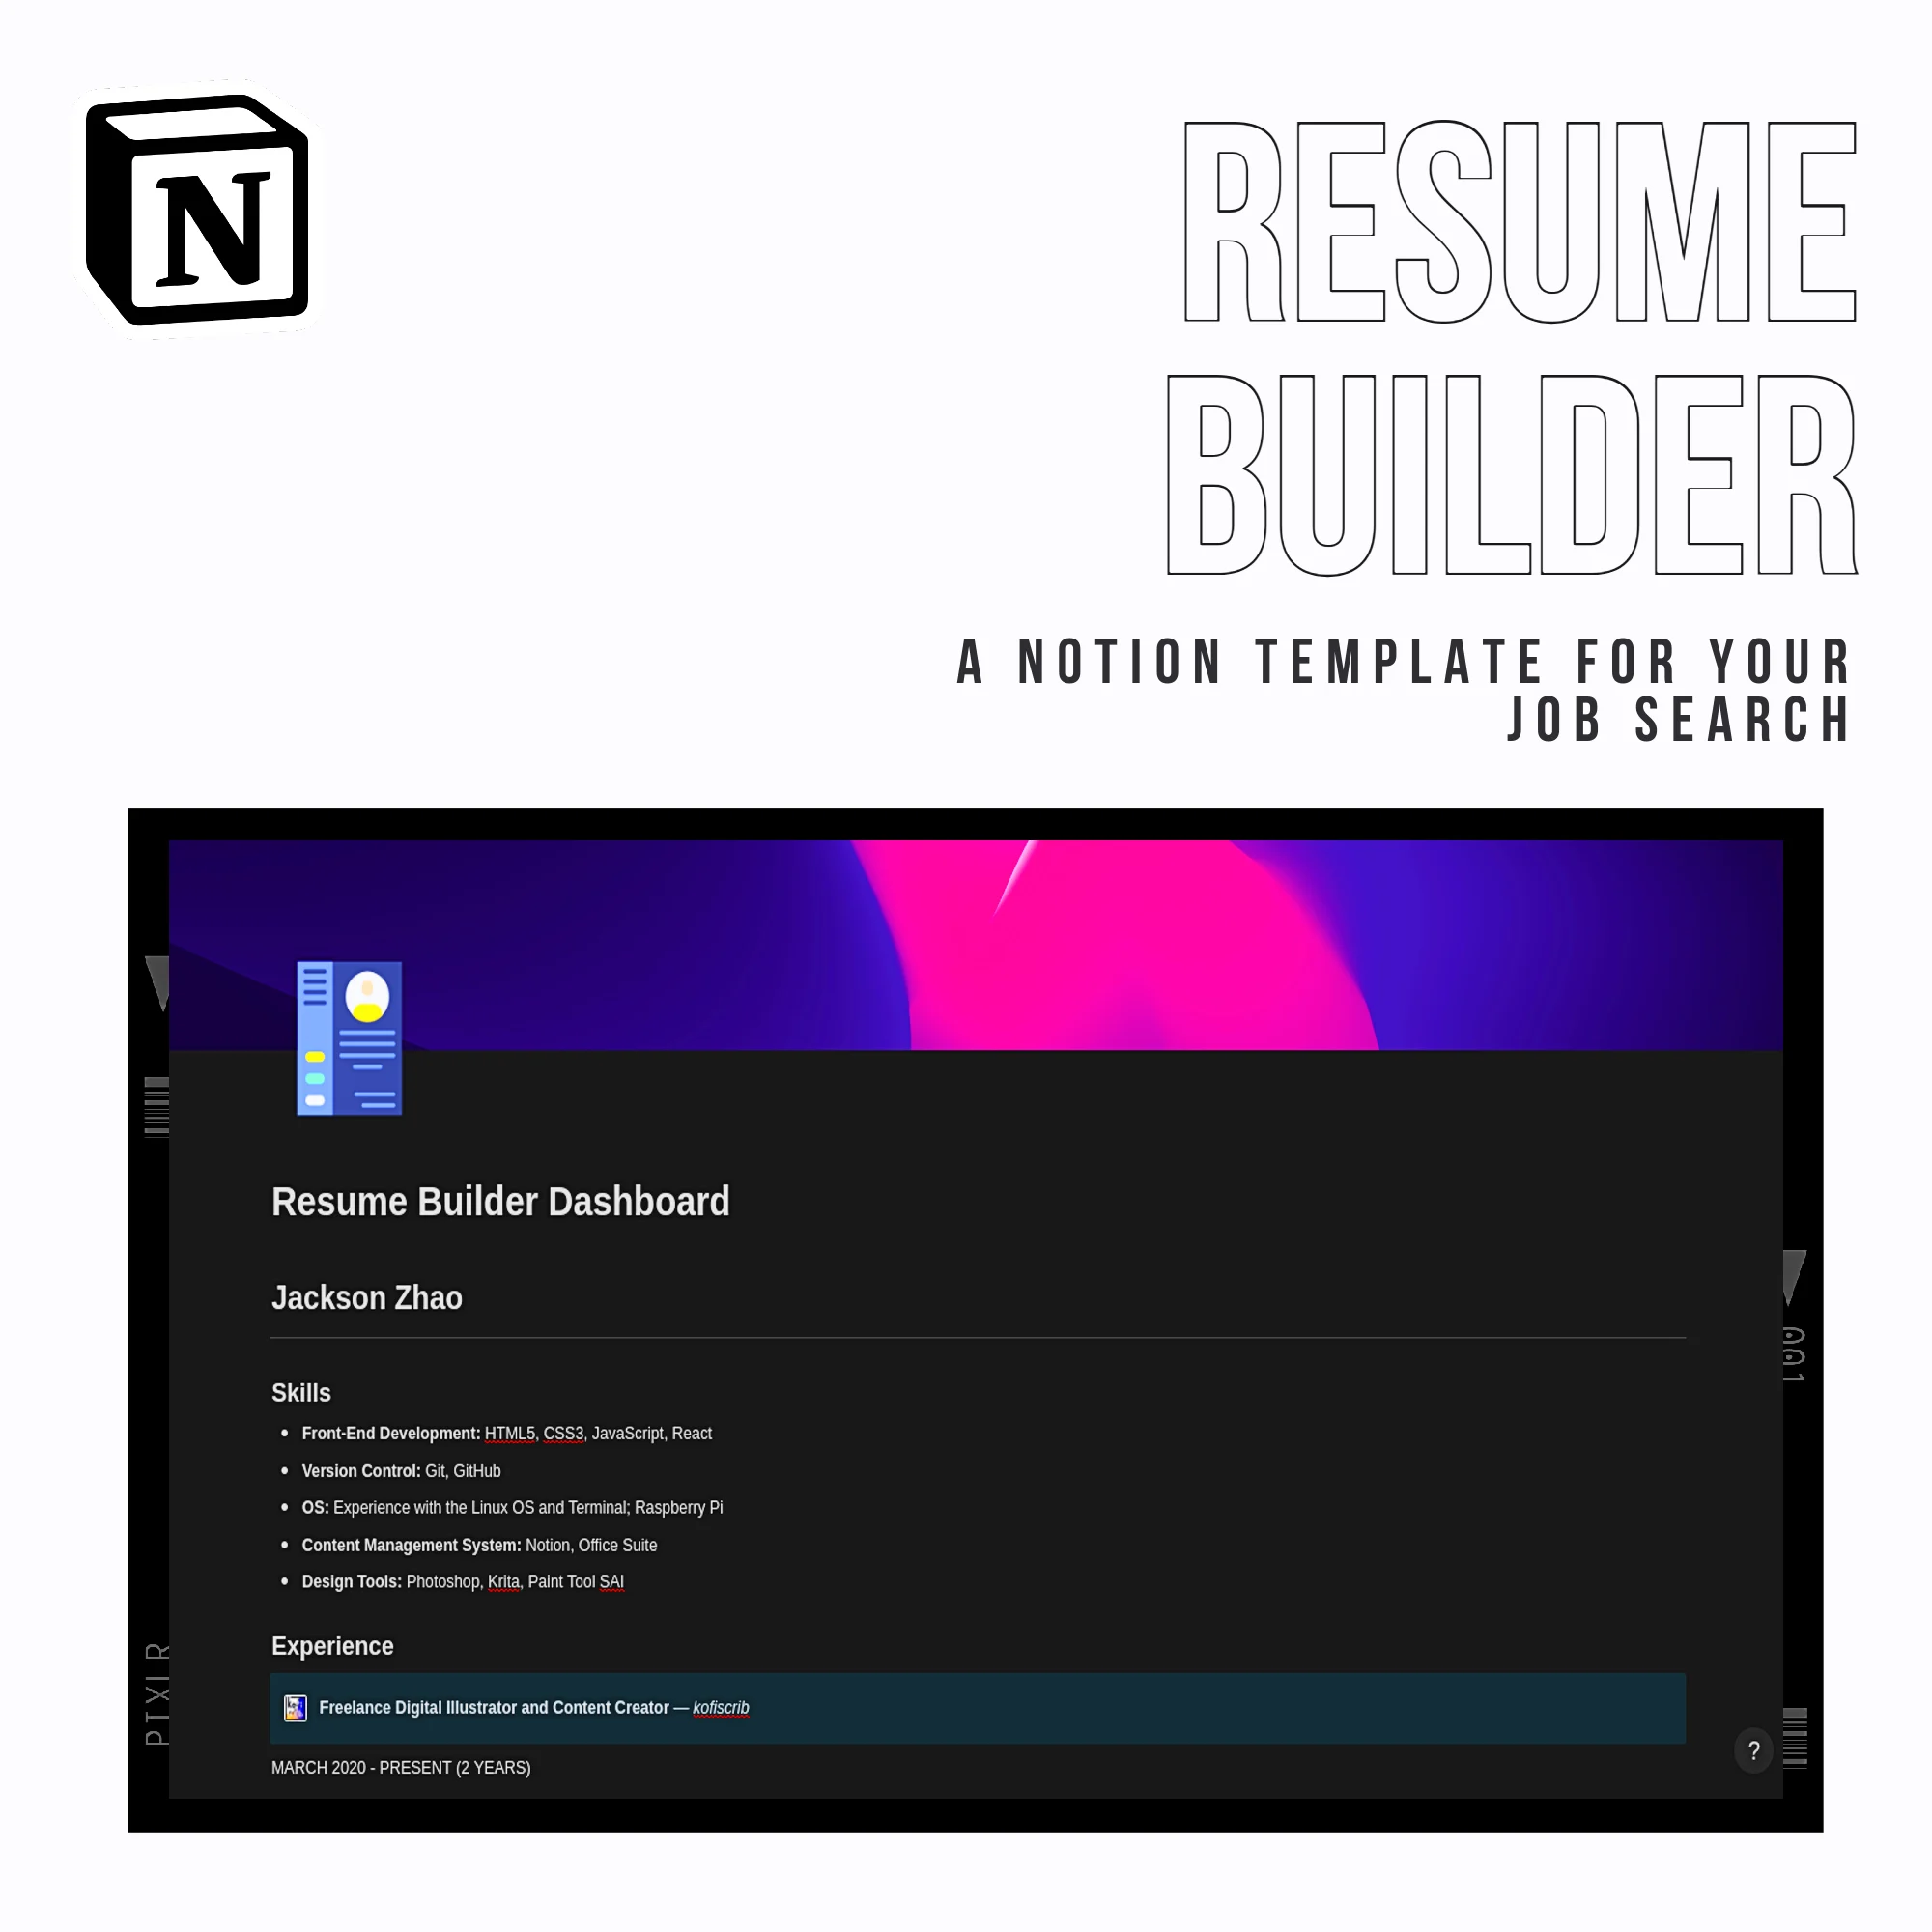 Resume_Builder_Thumbnail_Notion_Template